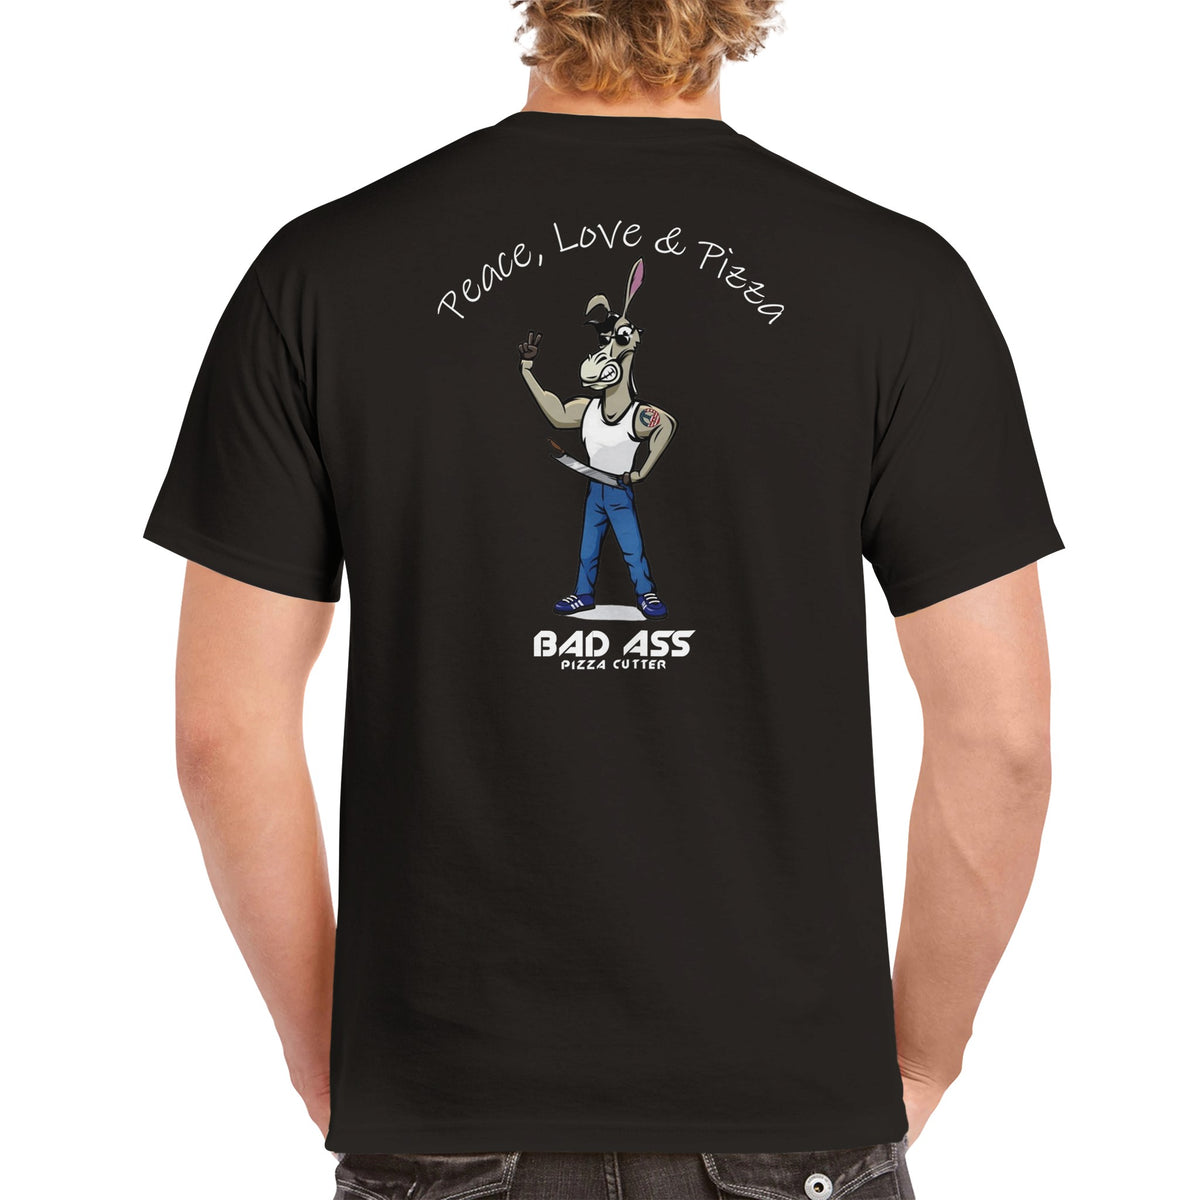 BAD ASS Peace, Love & Pizza Crewneck T-shirt